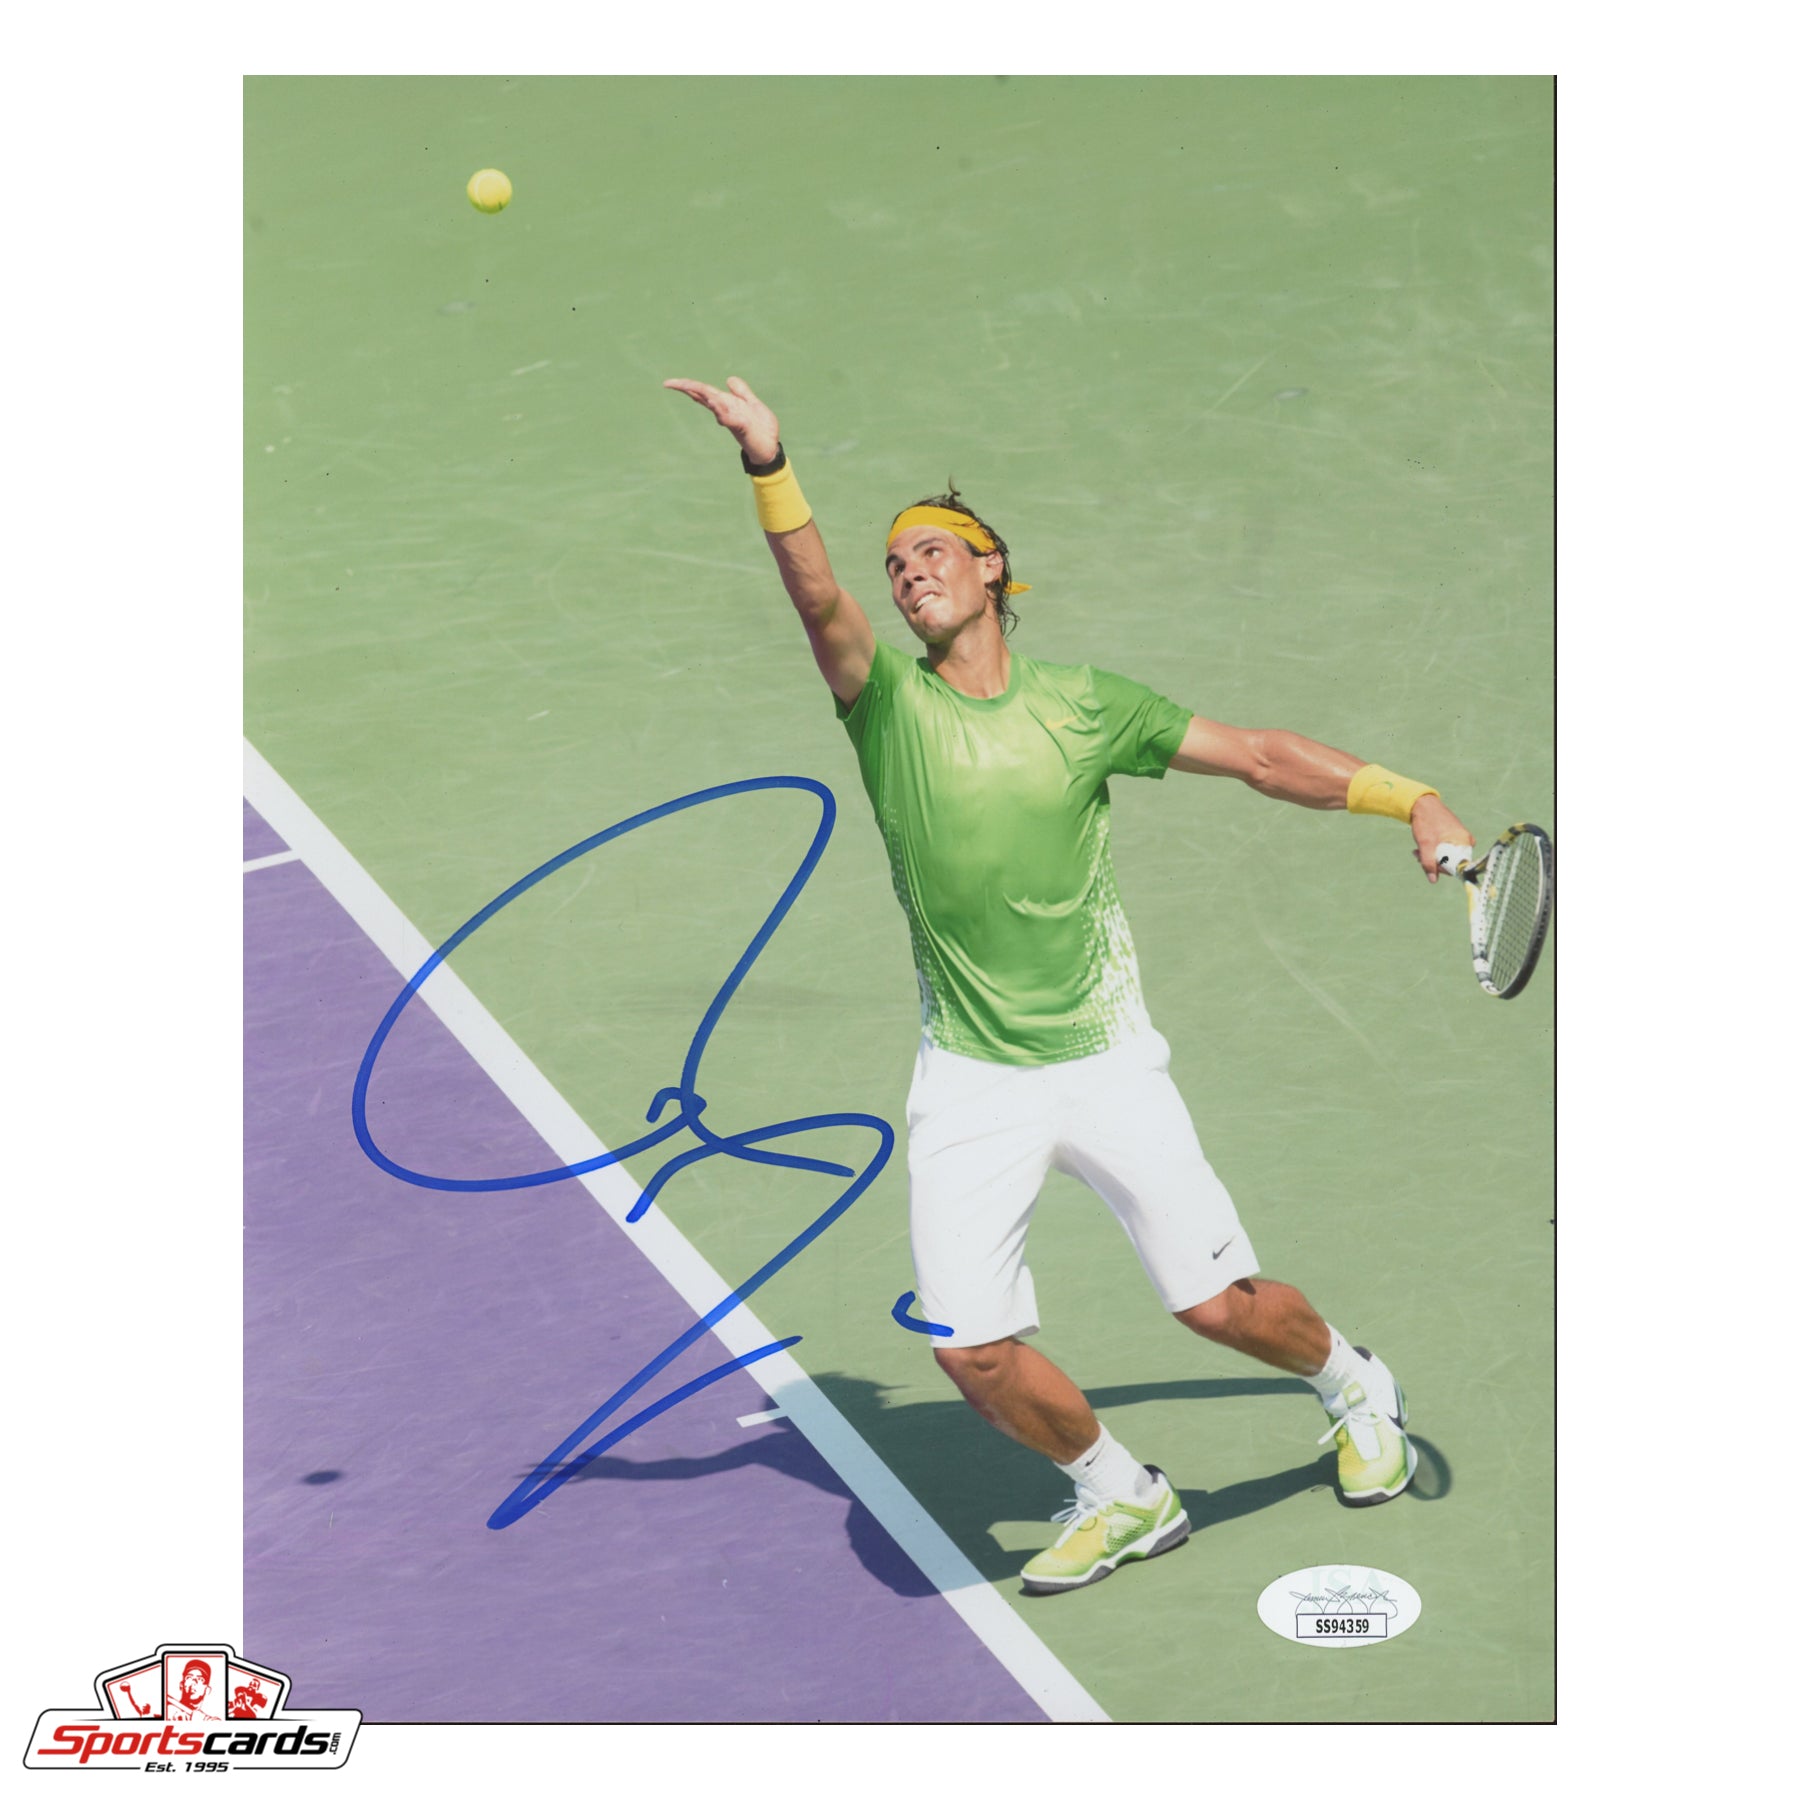 Rafael Nadal Signed 8x10 Photograph - JSA COA